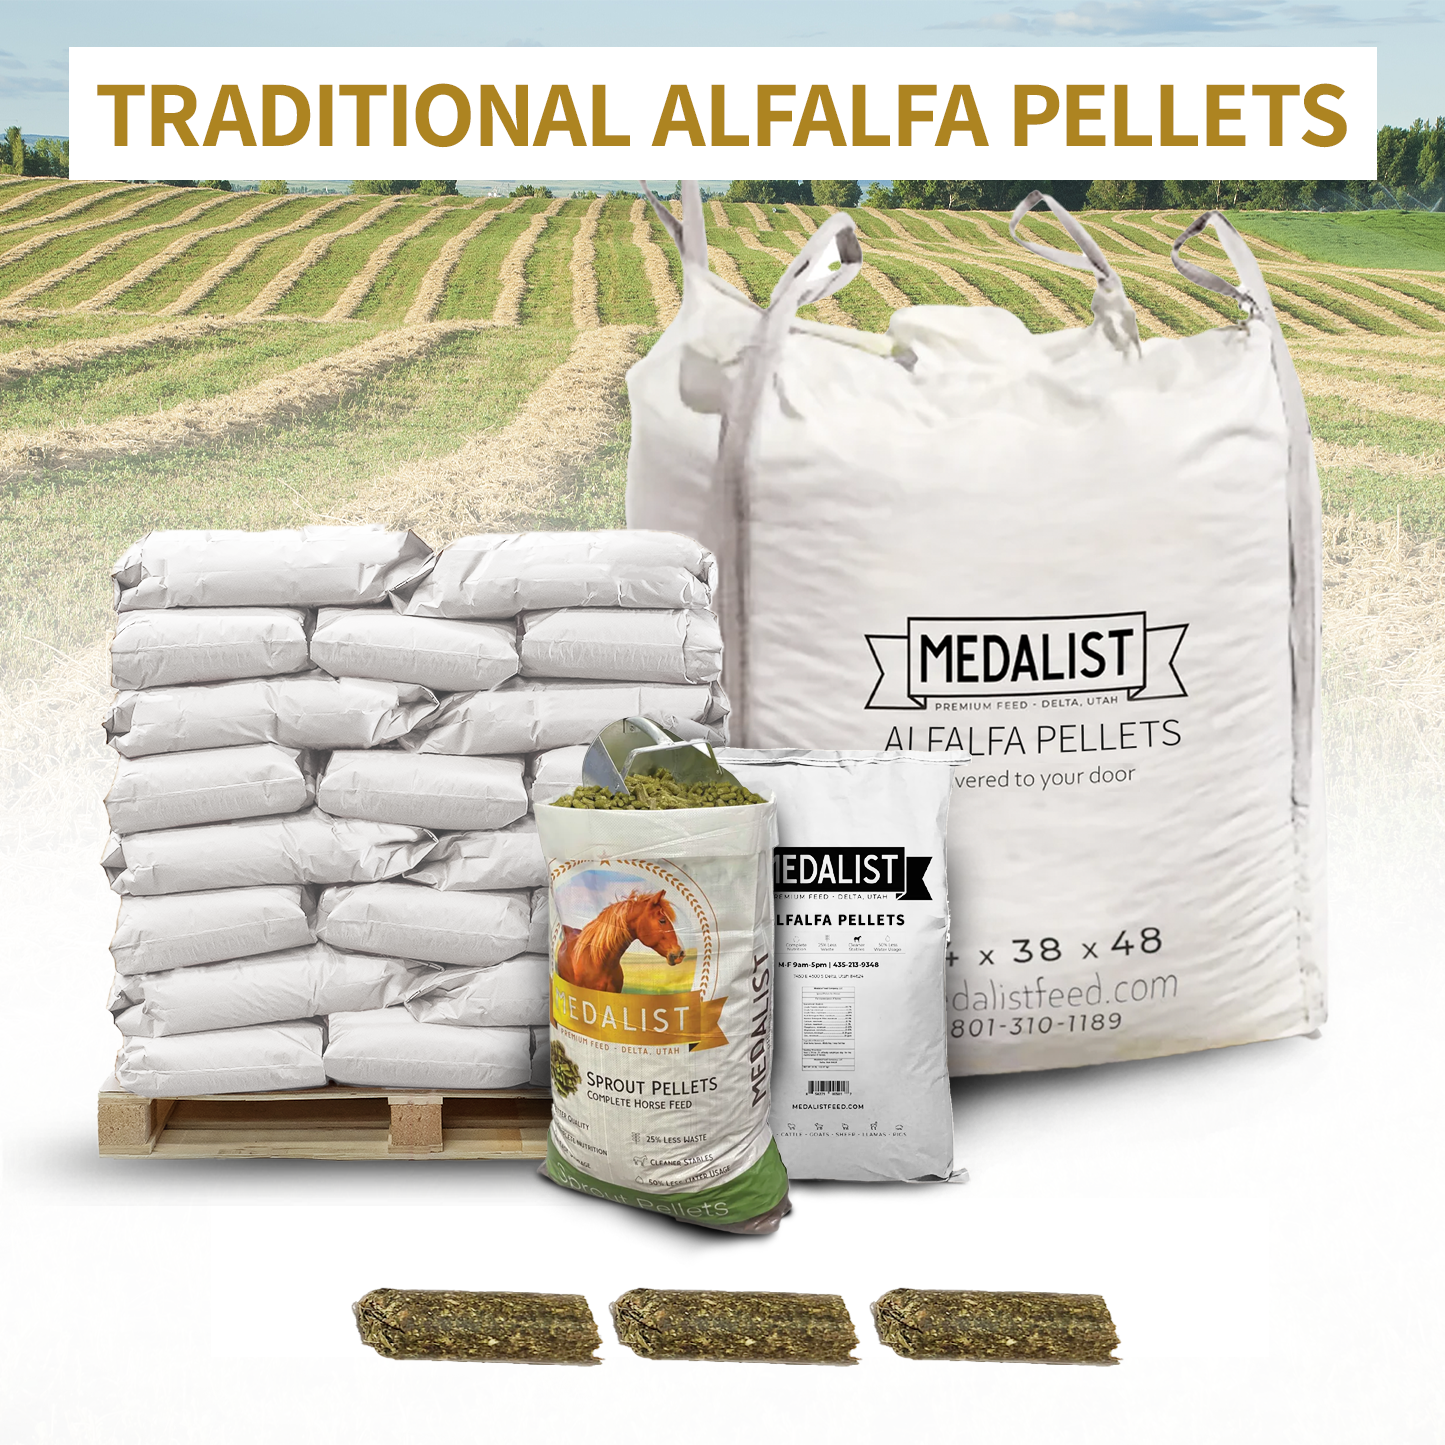 Medalist alfalfa pellets all sizes